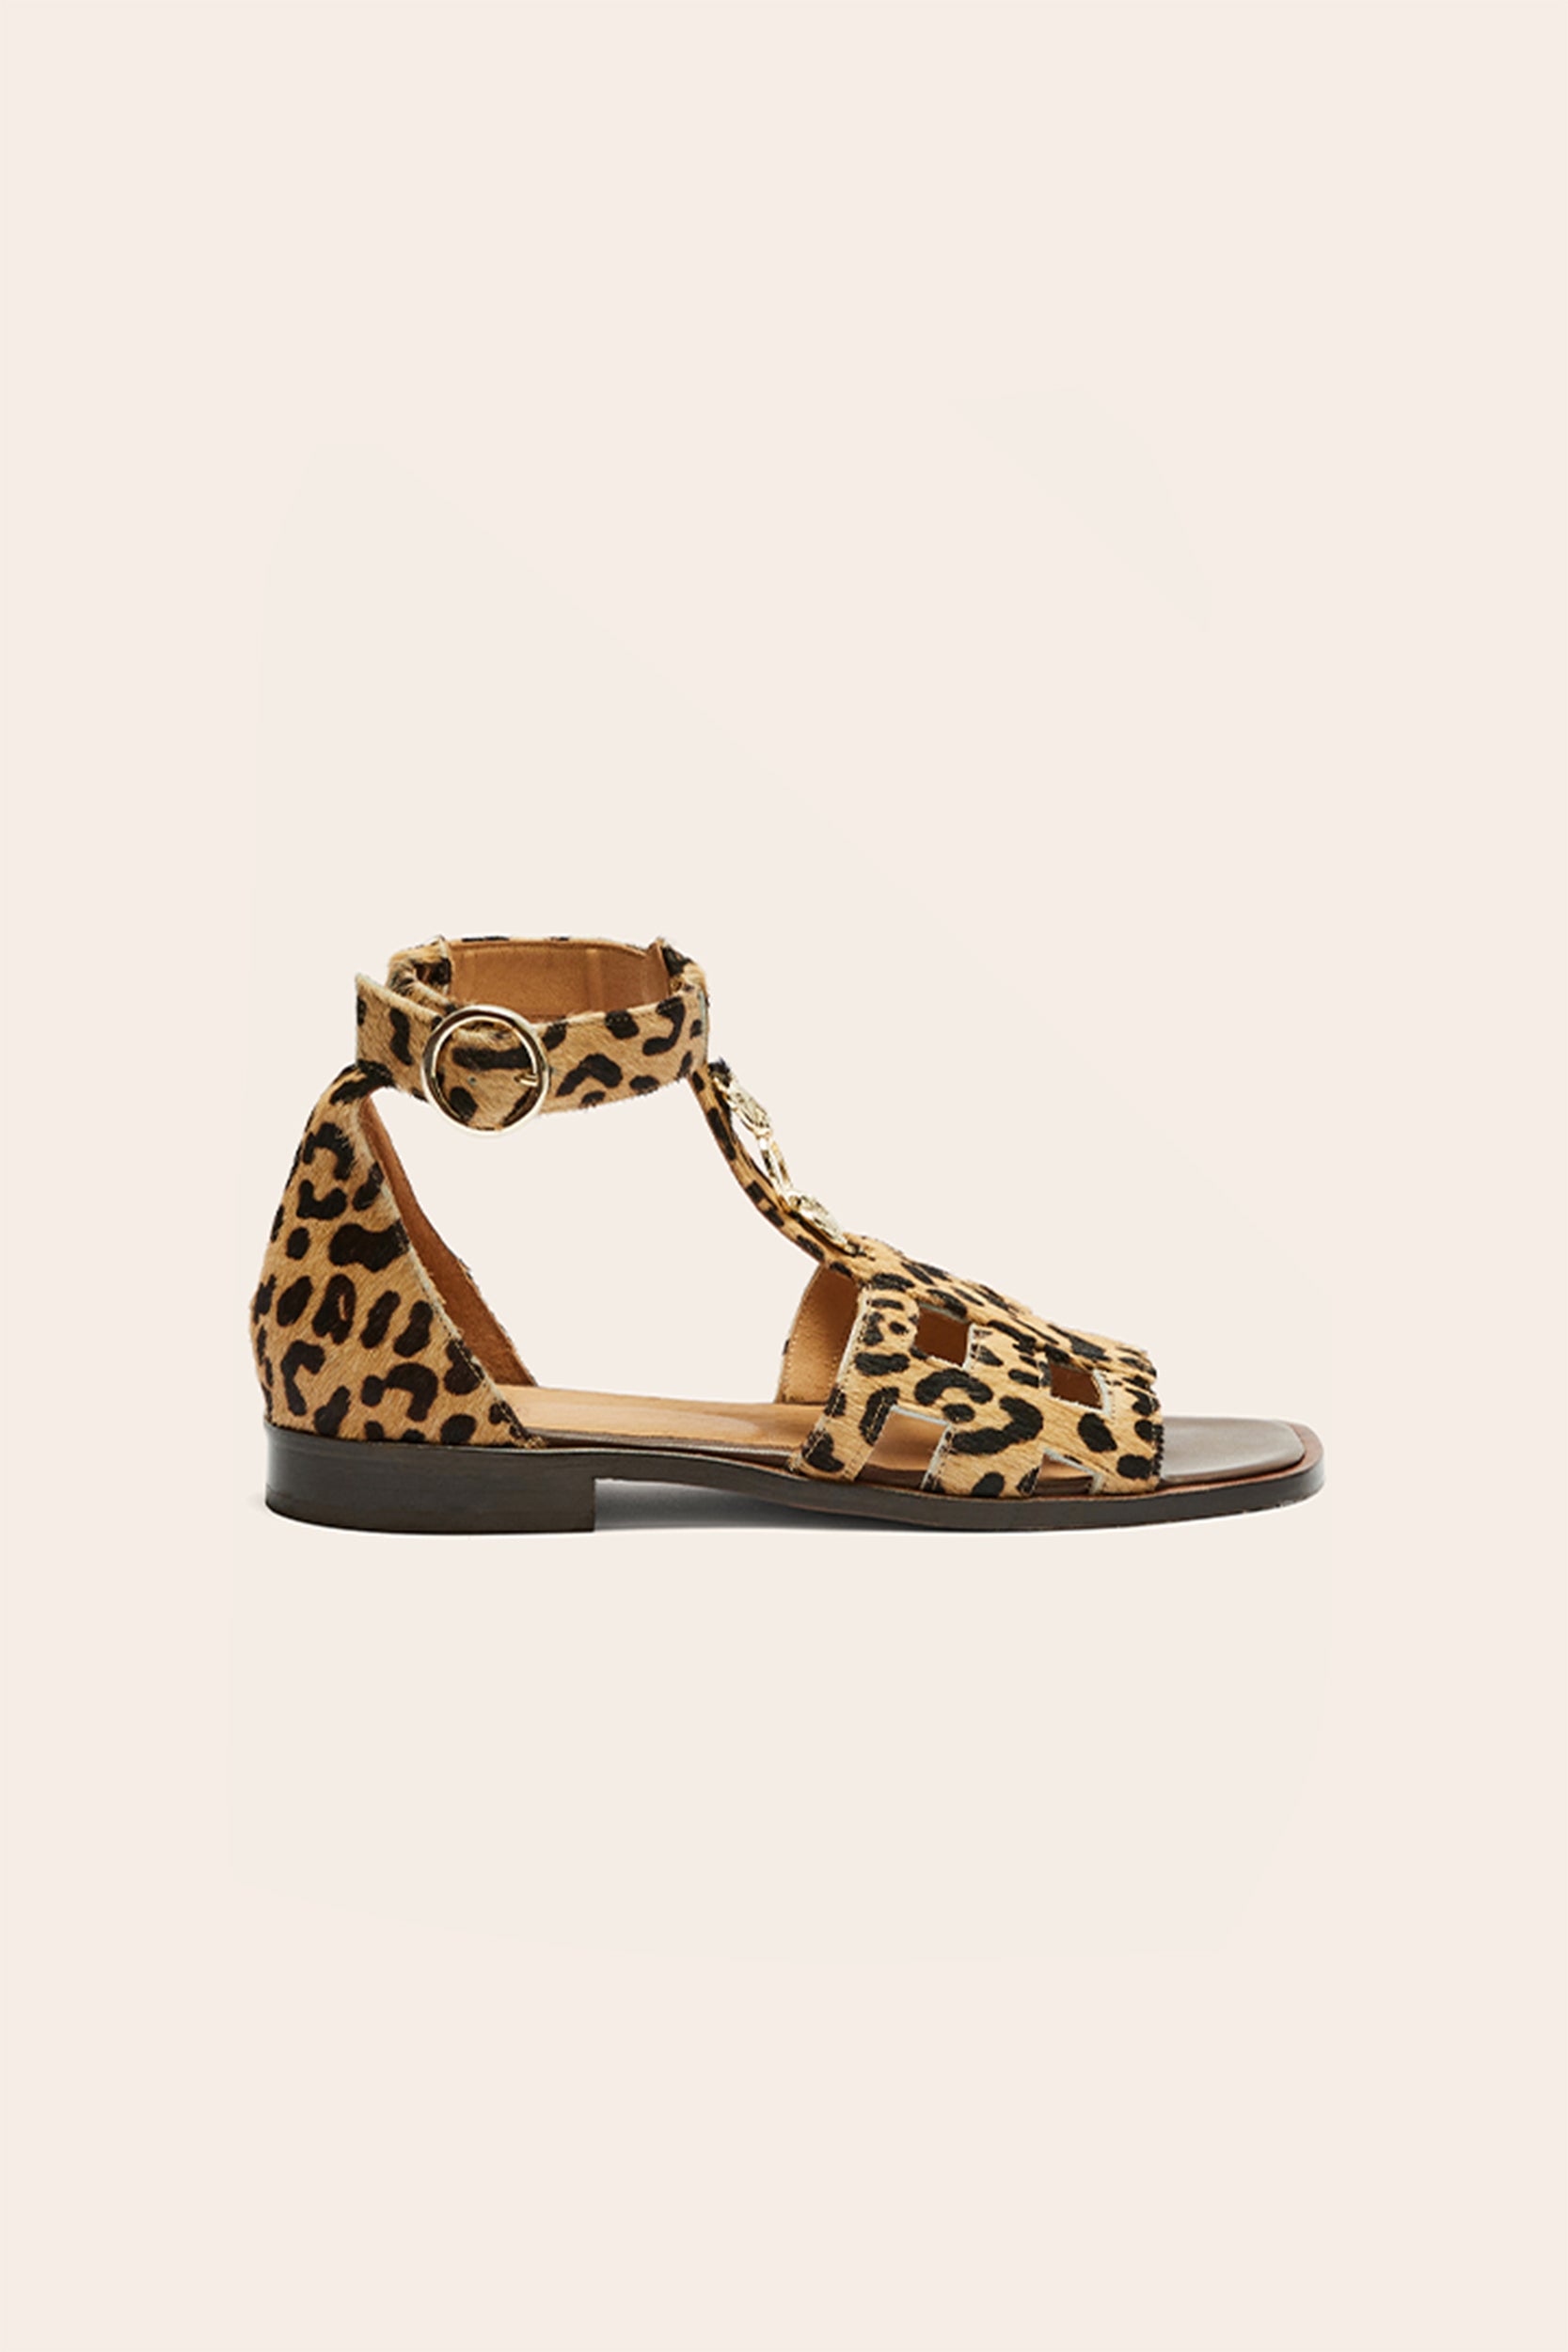 Selena pony cheetah sandals